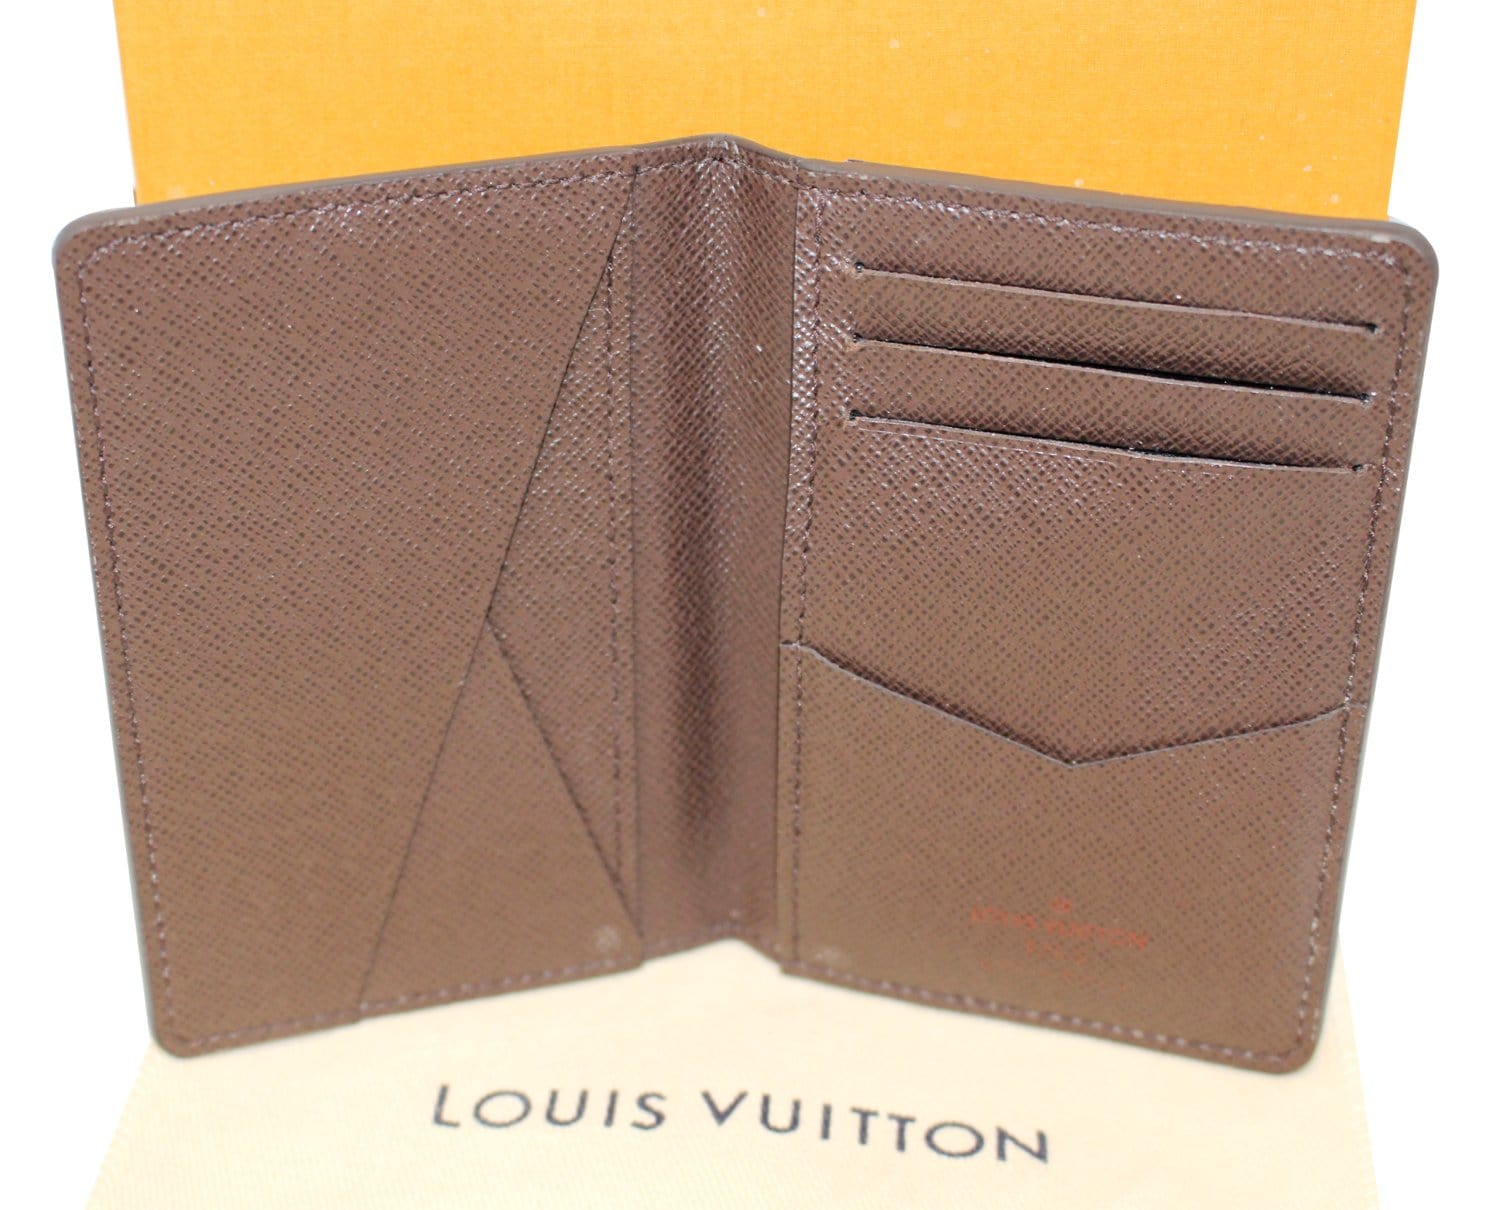 Louis Vuitton Pocket Organizer – yourvintagelvoe